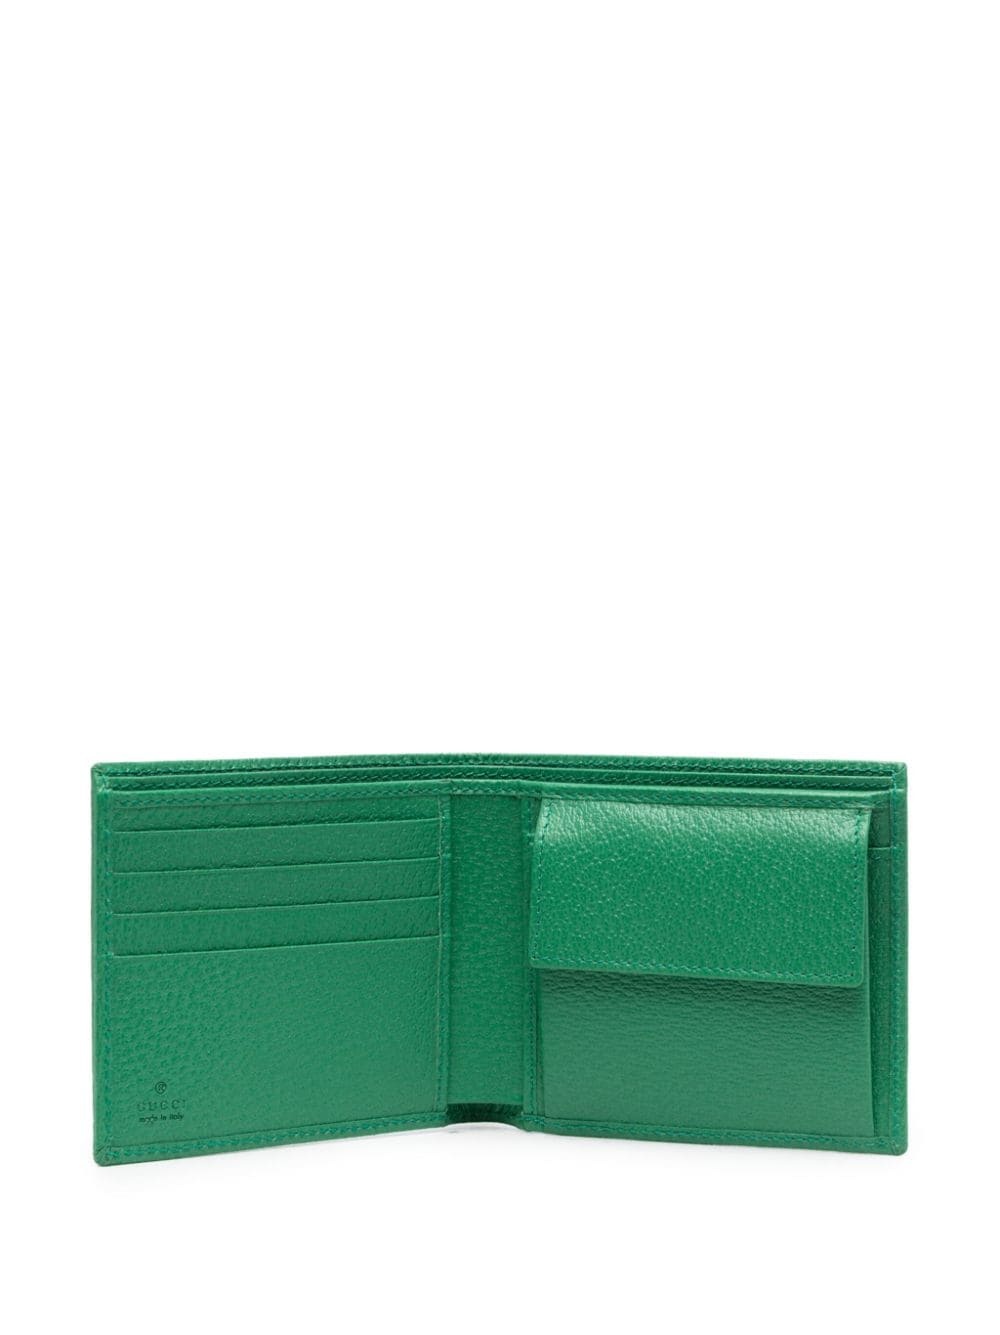 Gg motif bifold wallet - 2